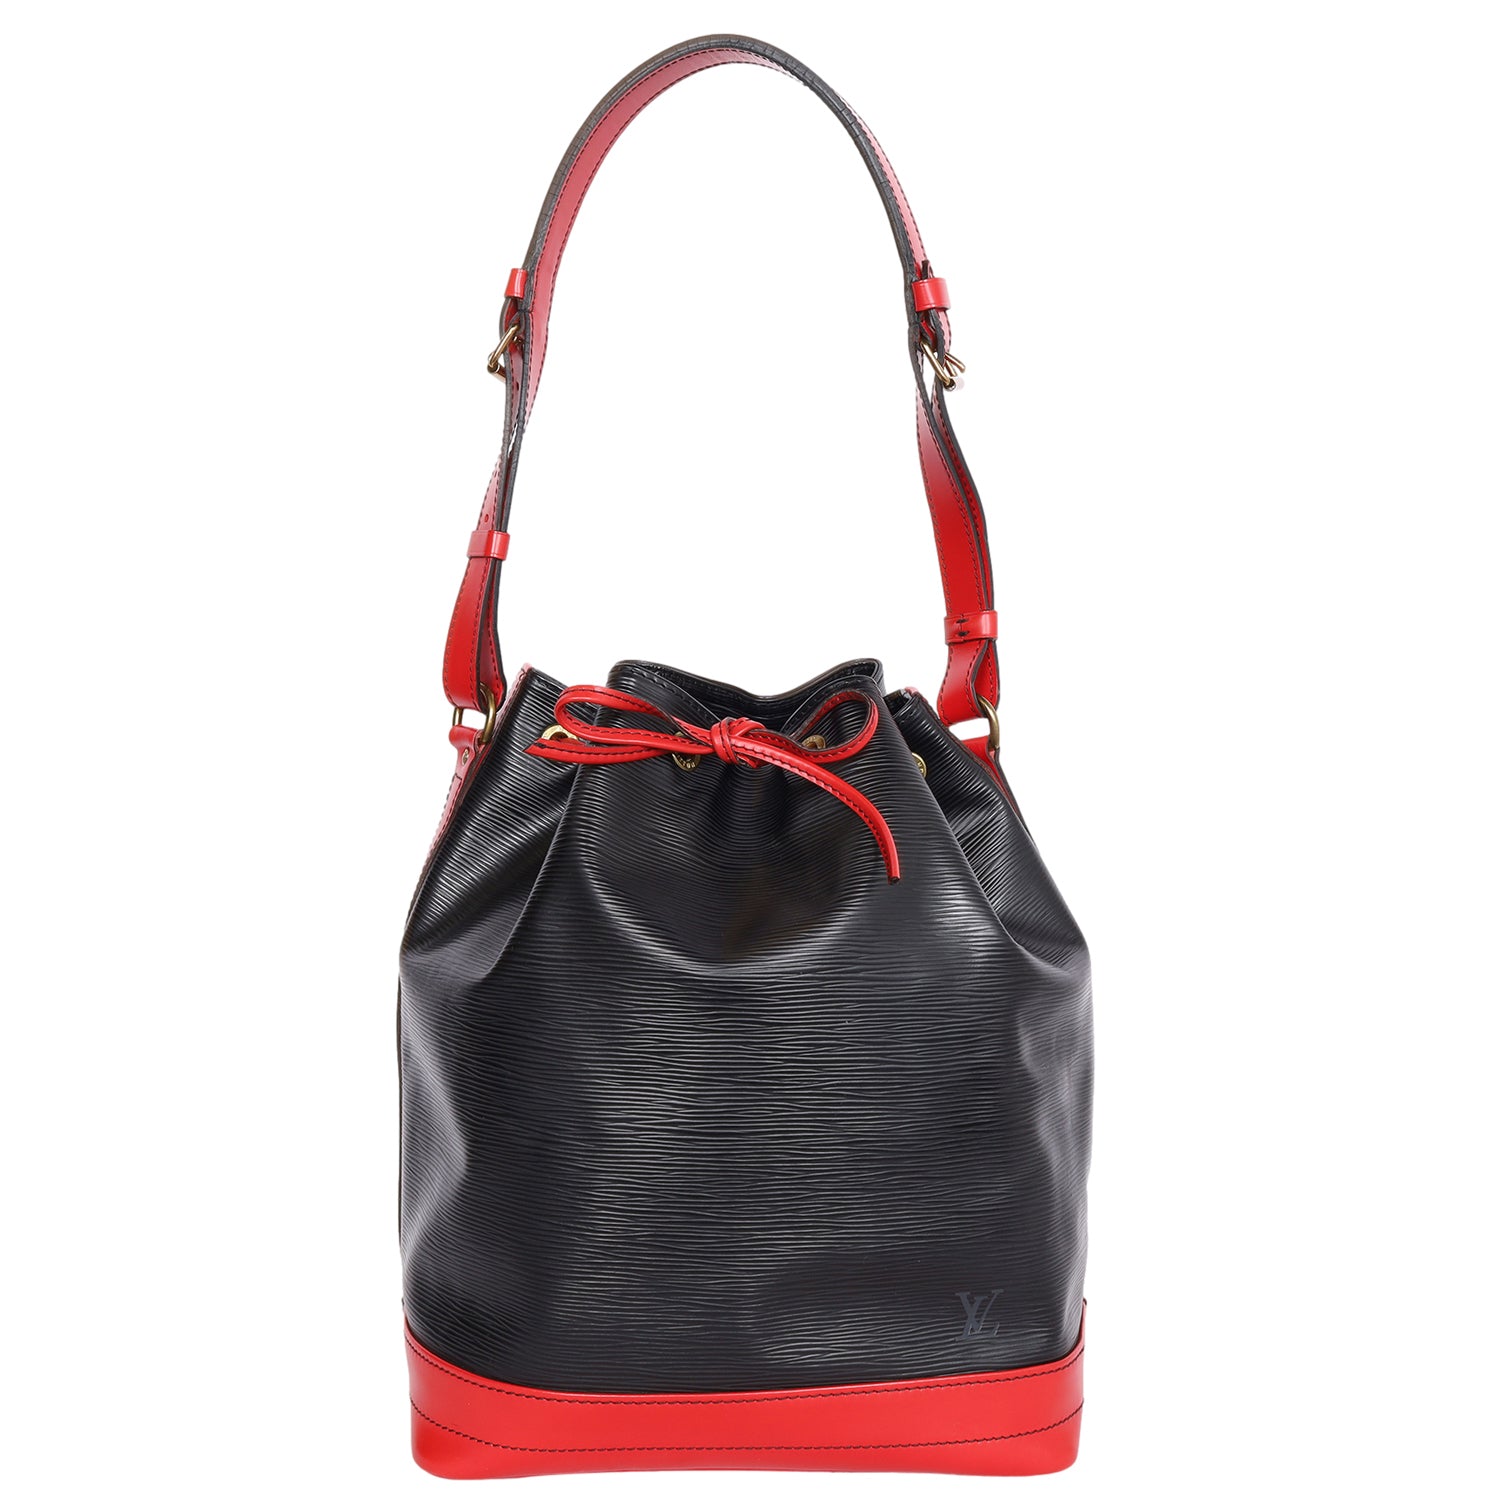 Authentic Louis Vuitton classic color crossbody bag, leather